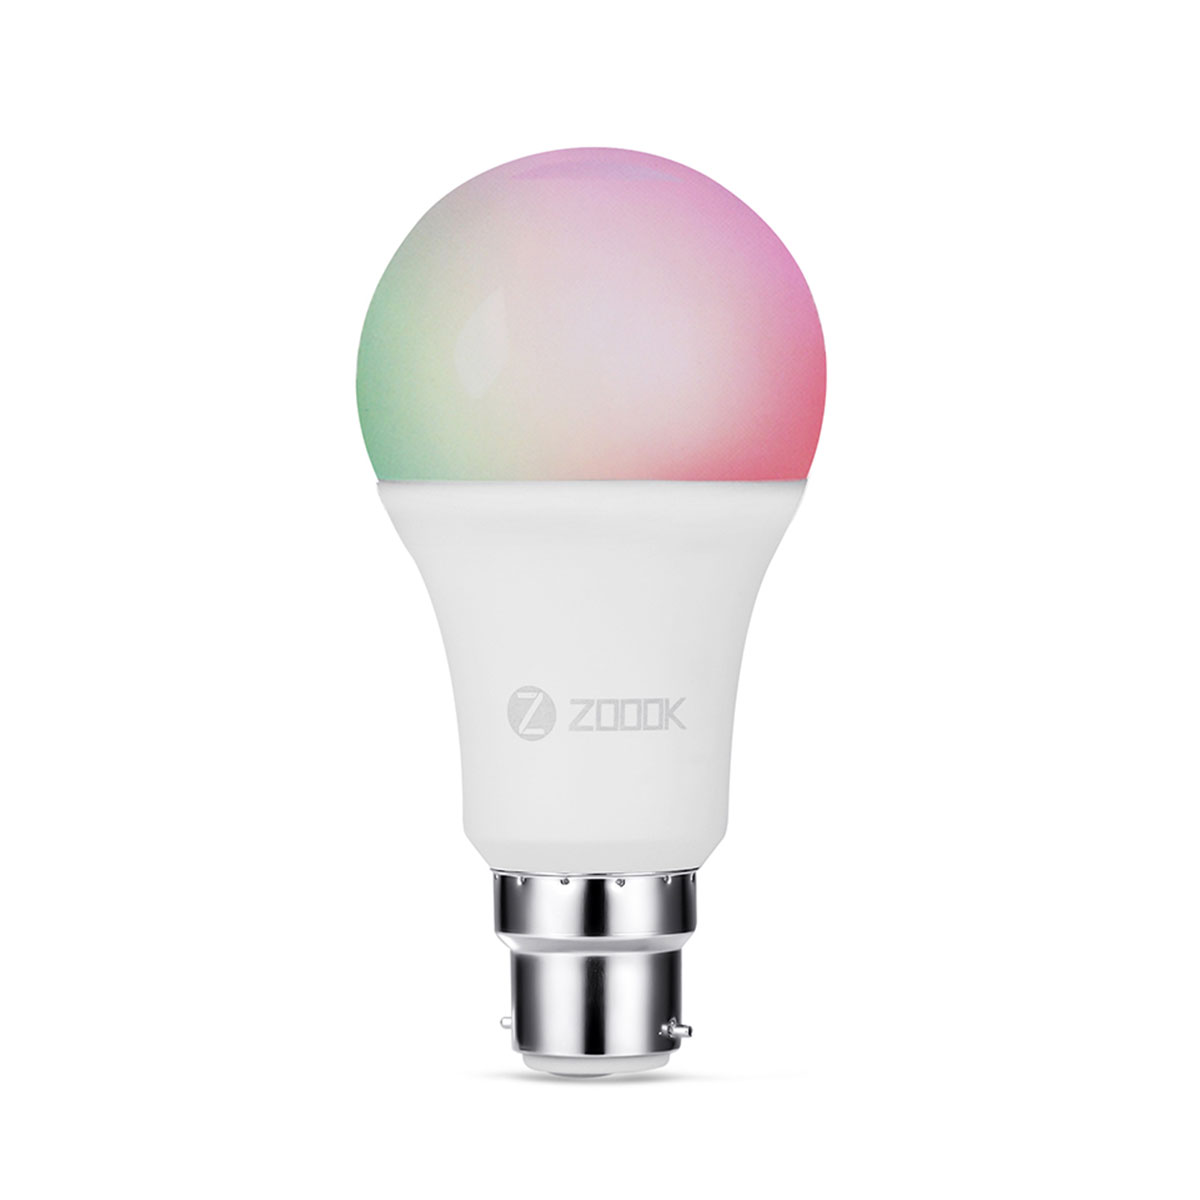 Zoook Shine Smart Wi-Fi LED Bulb - 60W